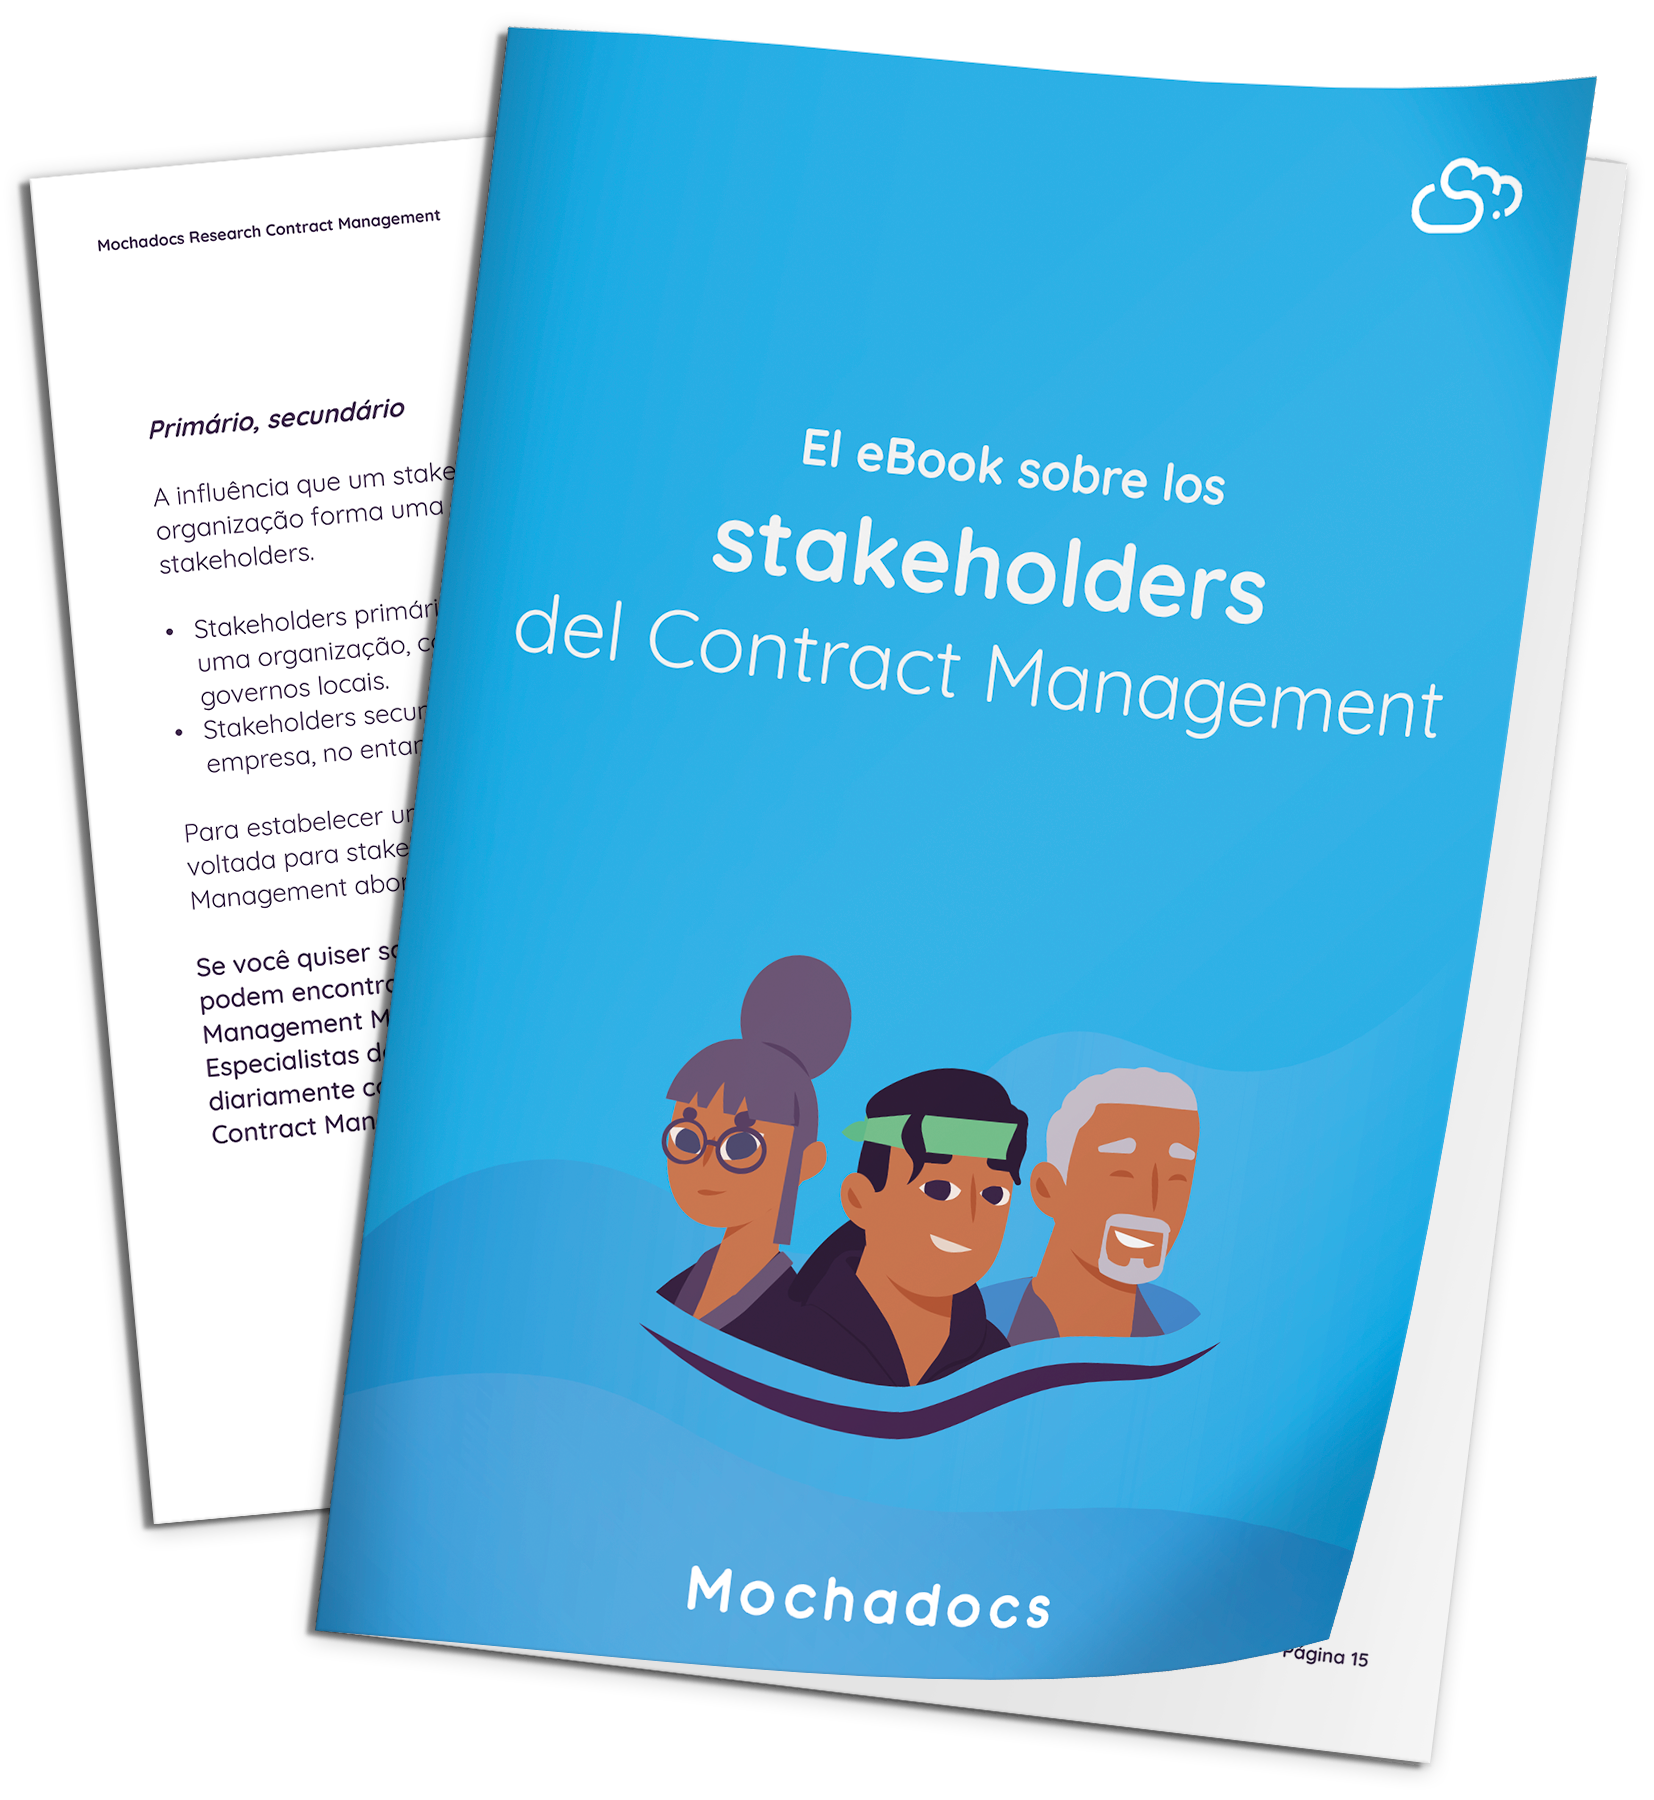 Mochadocs - Contract Management - eBook - Stakeholders del Contract Management